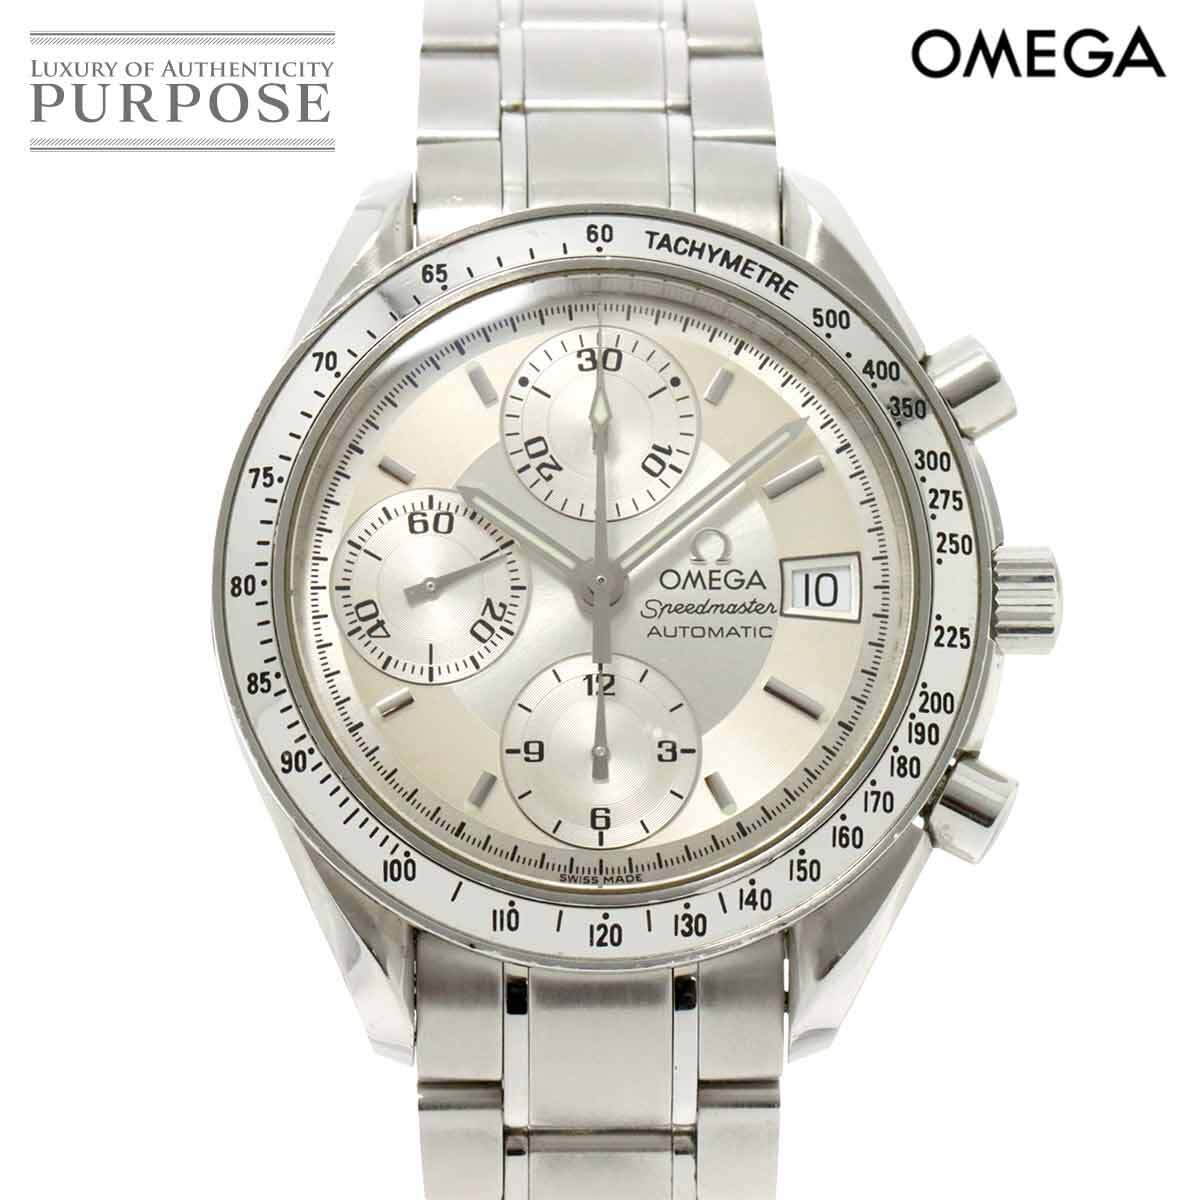  Omega OMEGA Speedmaster Date 3513 30 chronograph men's wristwatch silver face AT self-winding watch Speedmaster 90230158